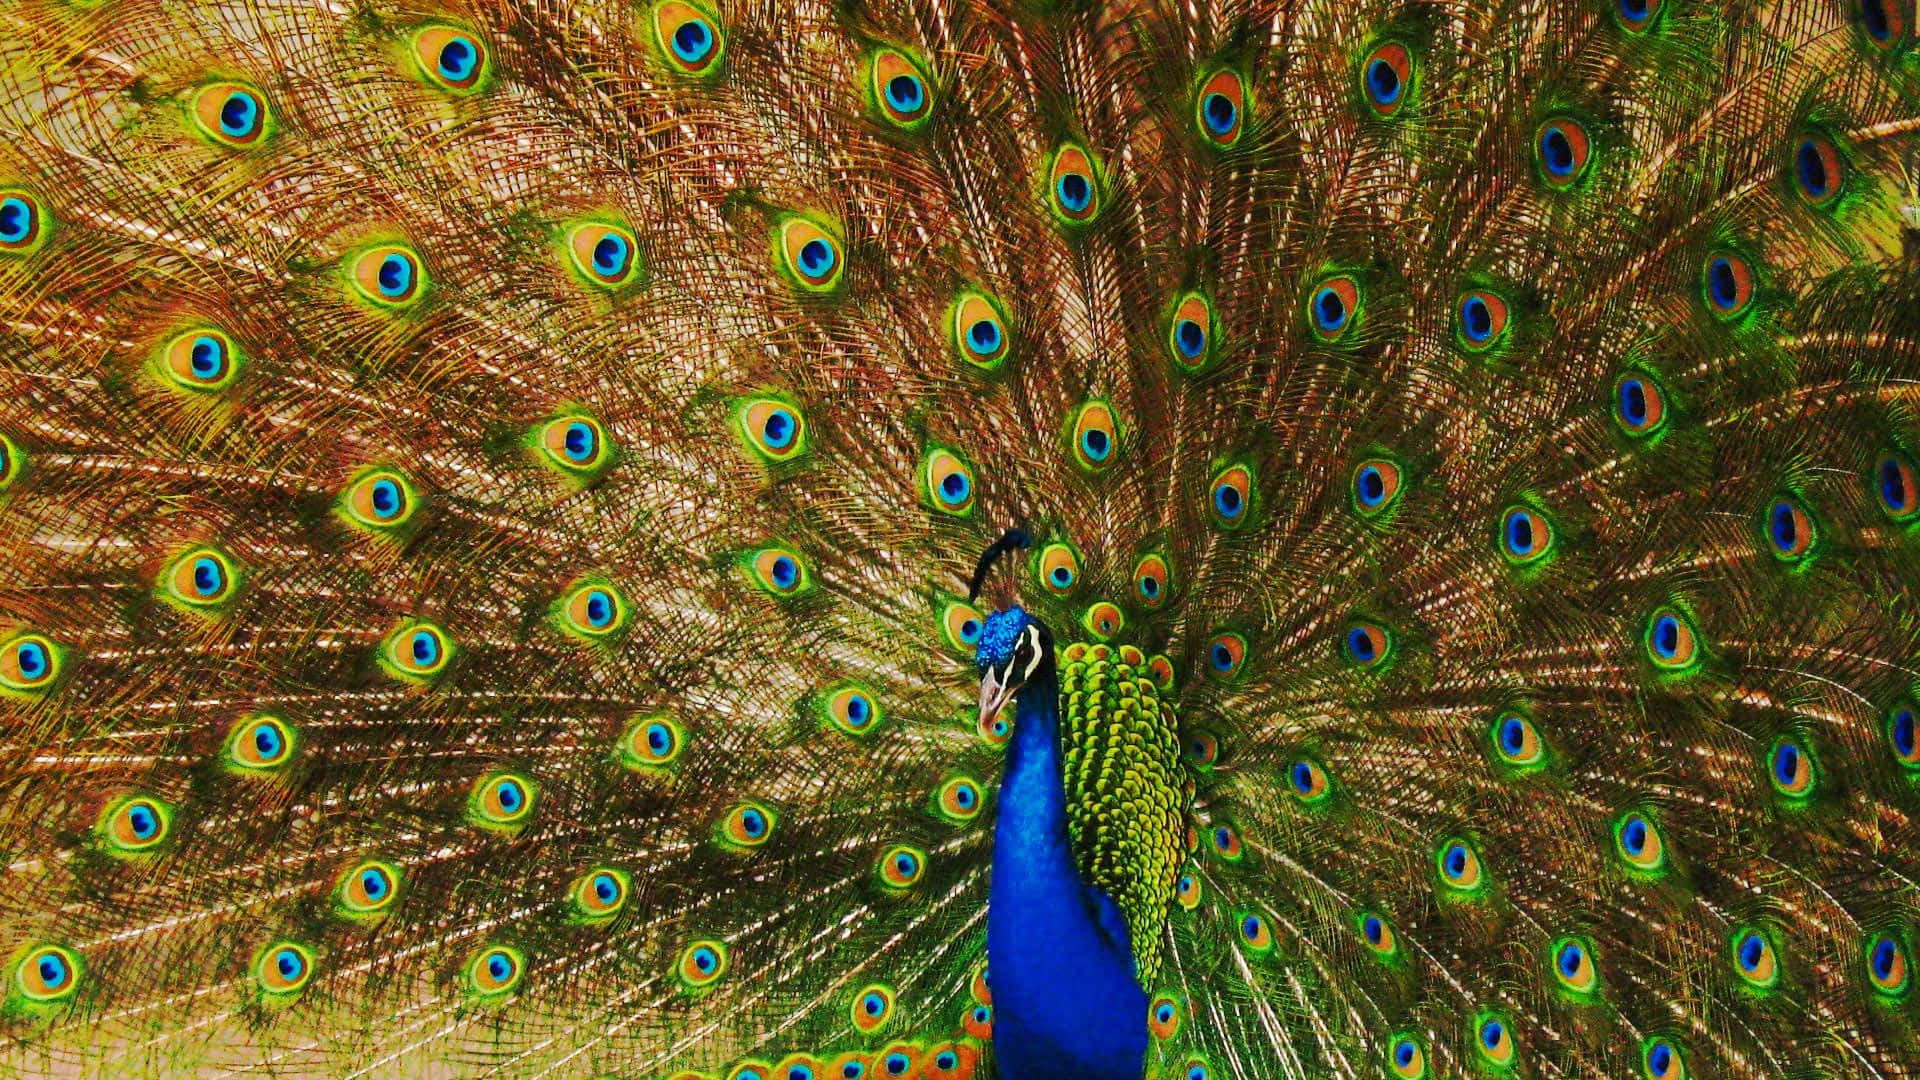 Beautiful Peacock Feathers Illuminated by Sunlight